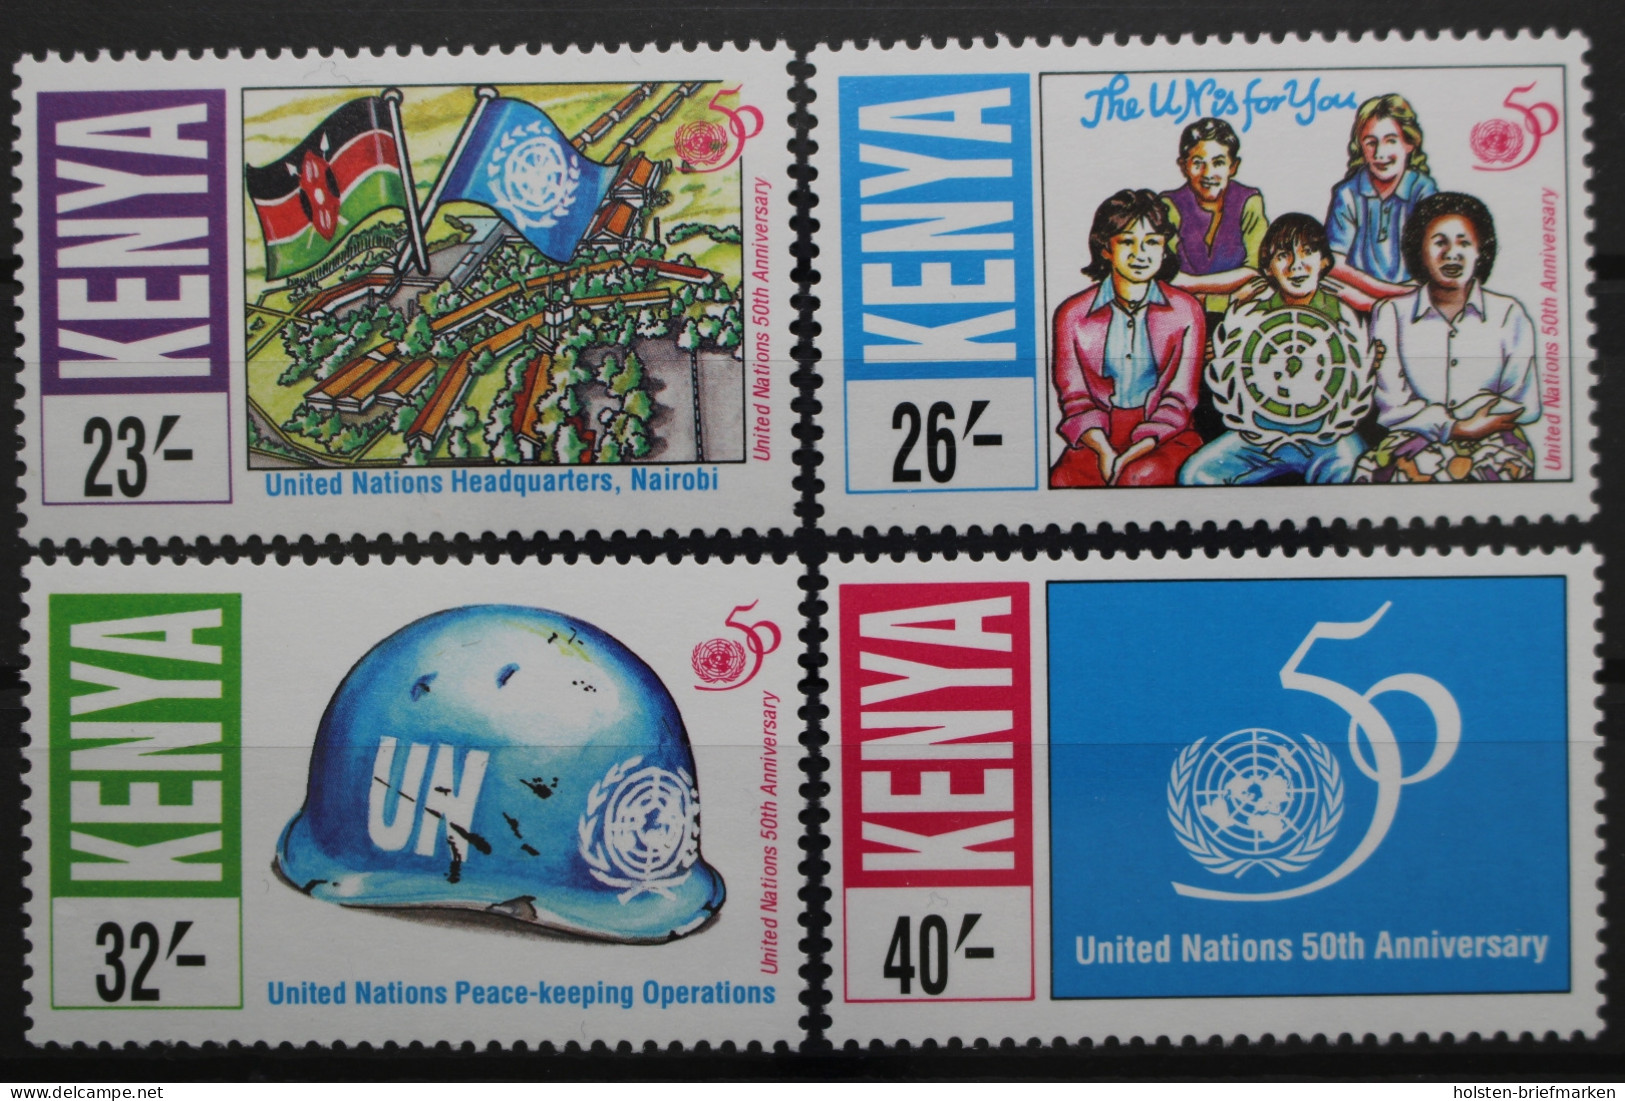 Kenia, MiNr. 636-639, Postfrisch - Kenya (1963-...)